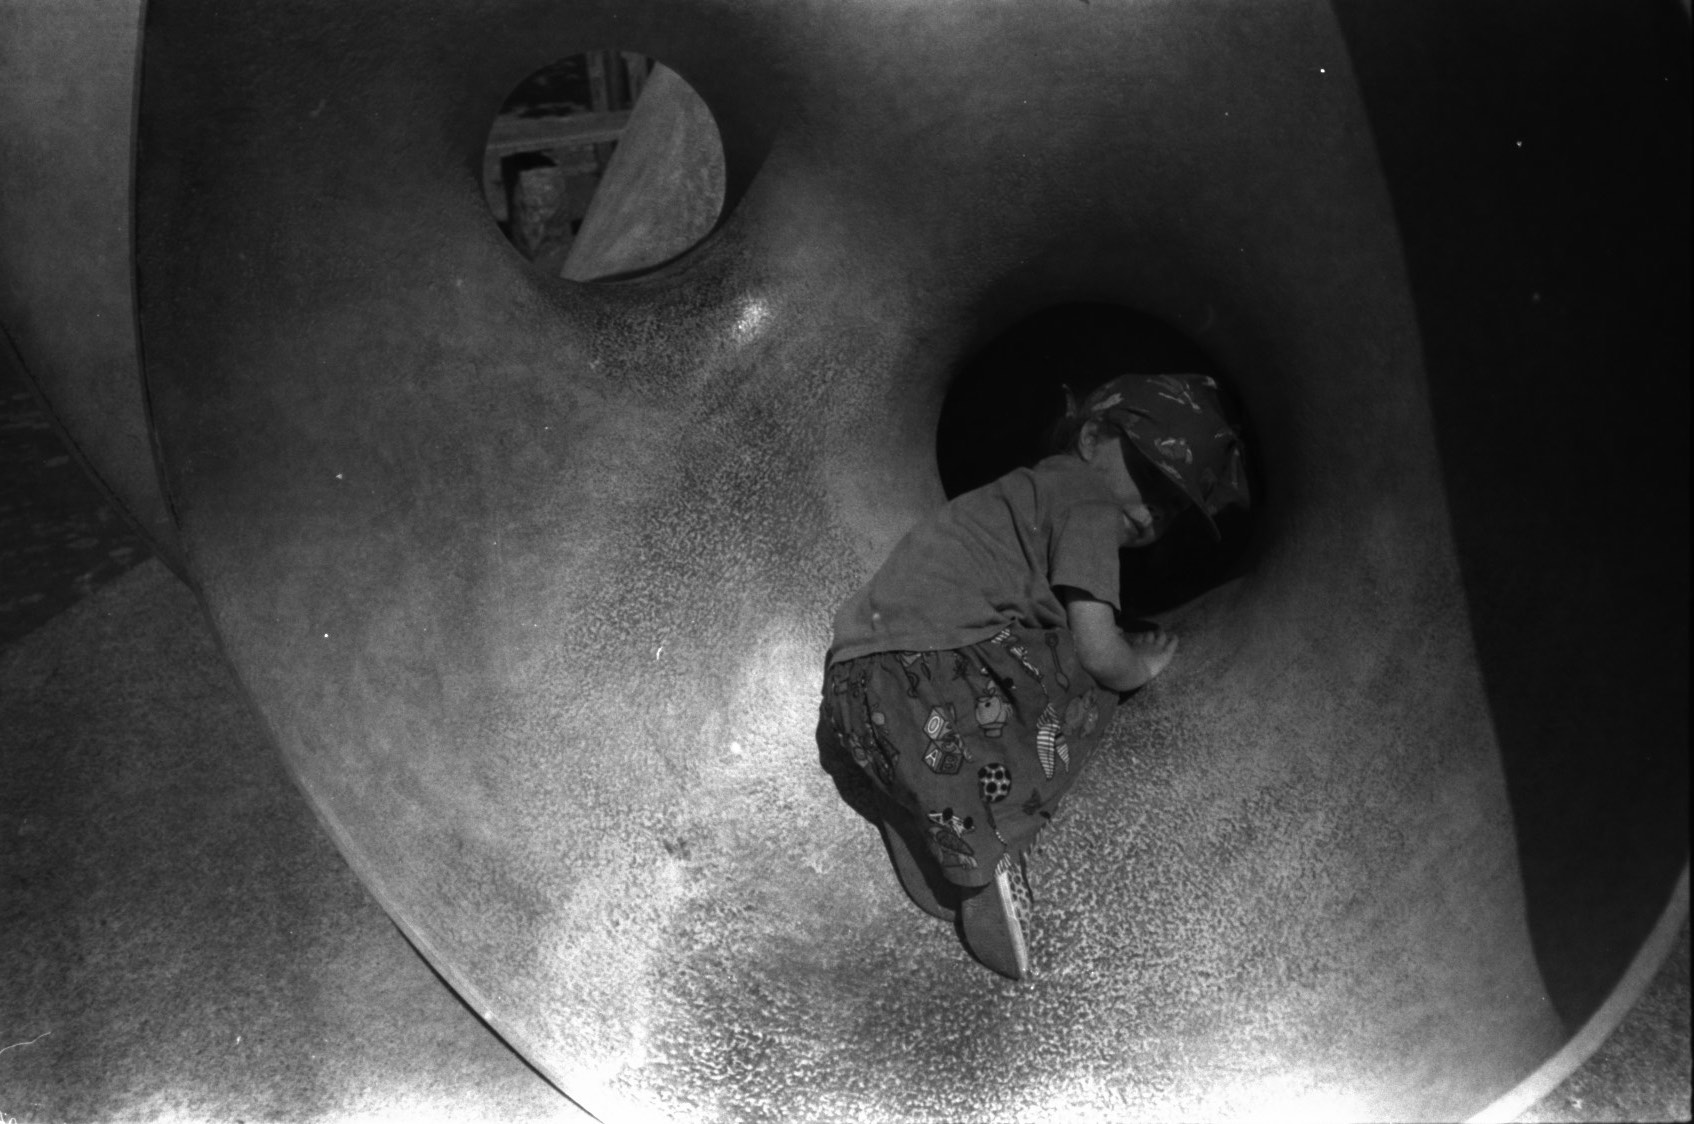 Child exploring sculpture (Pic: Tobias Eriksson)